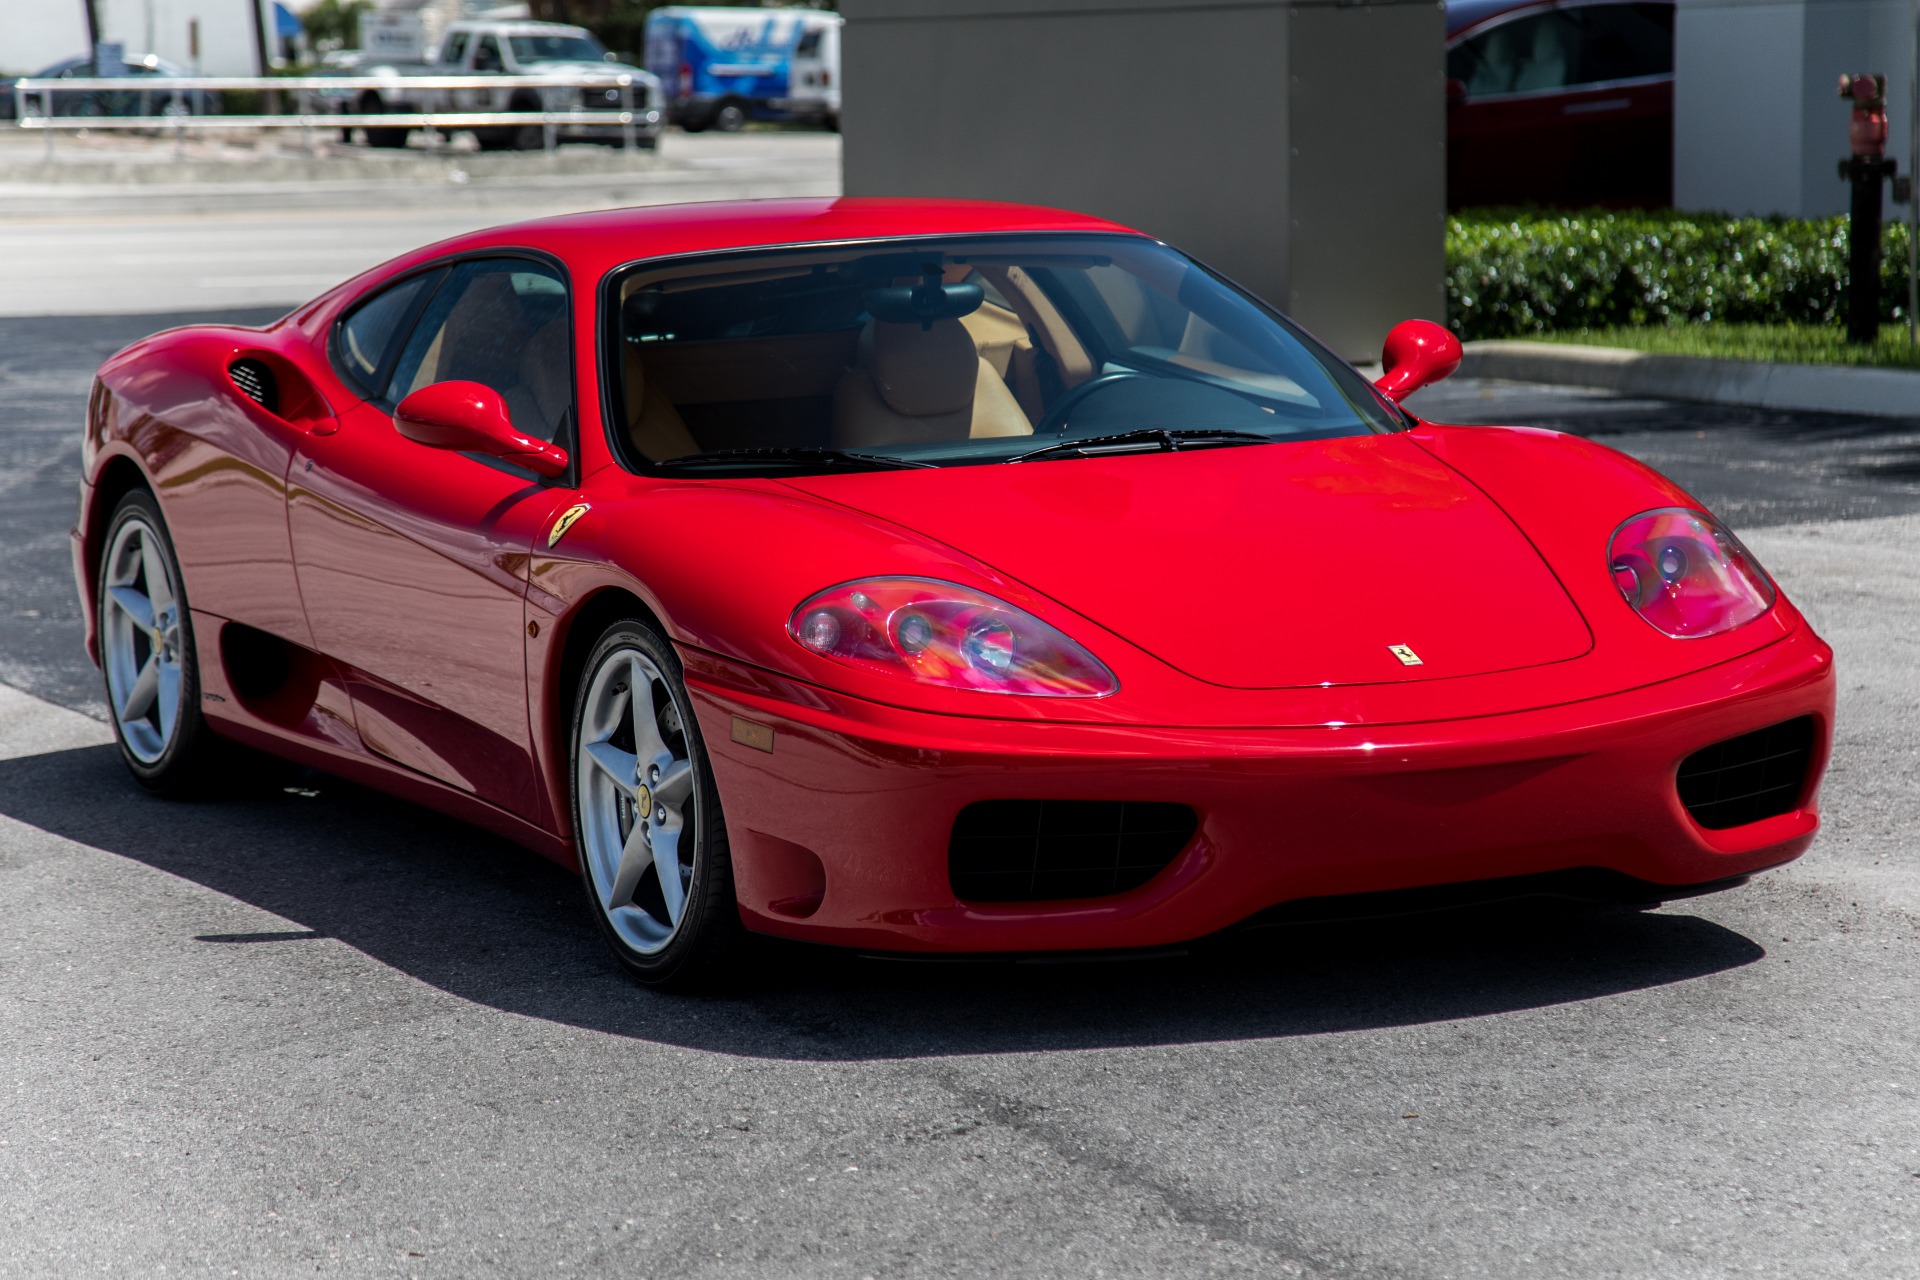 Used 2000 Ferrari 360 Modena For Sale 84 900 Marino Performance 